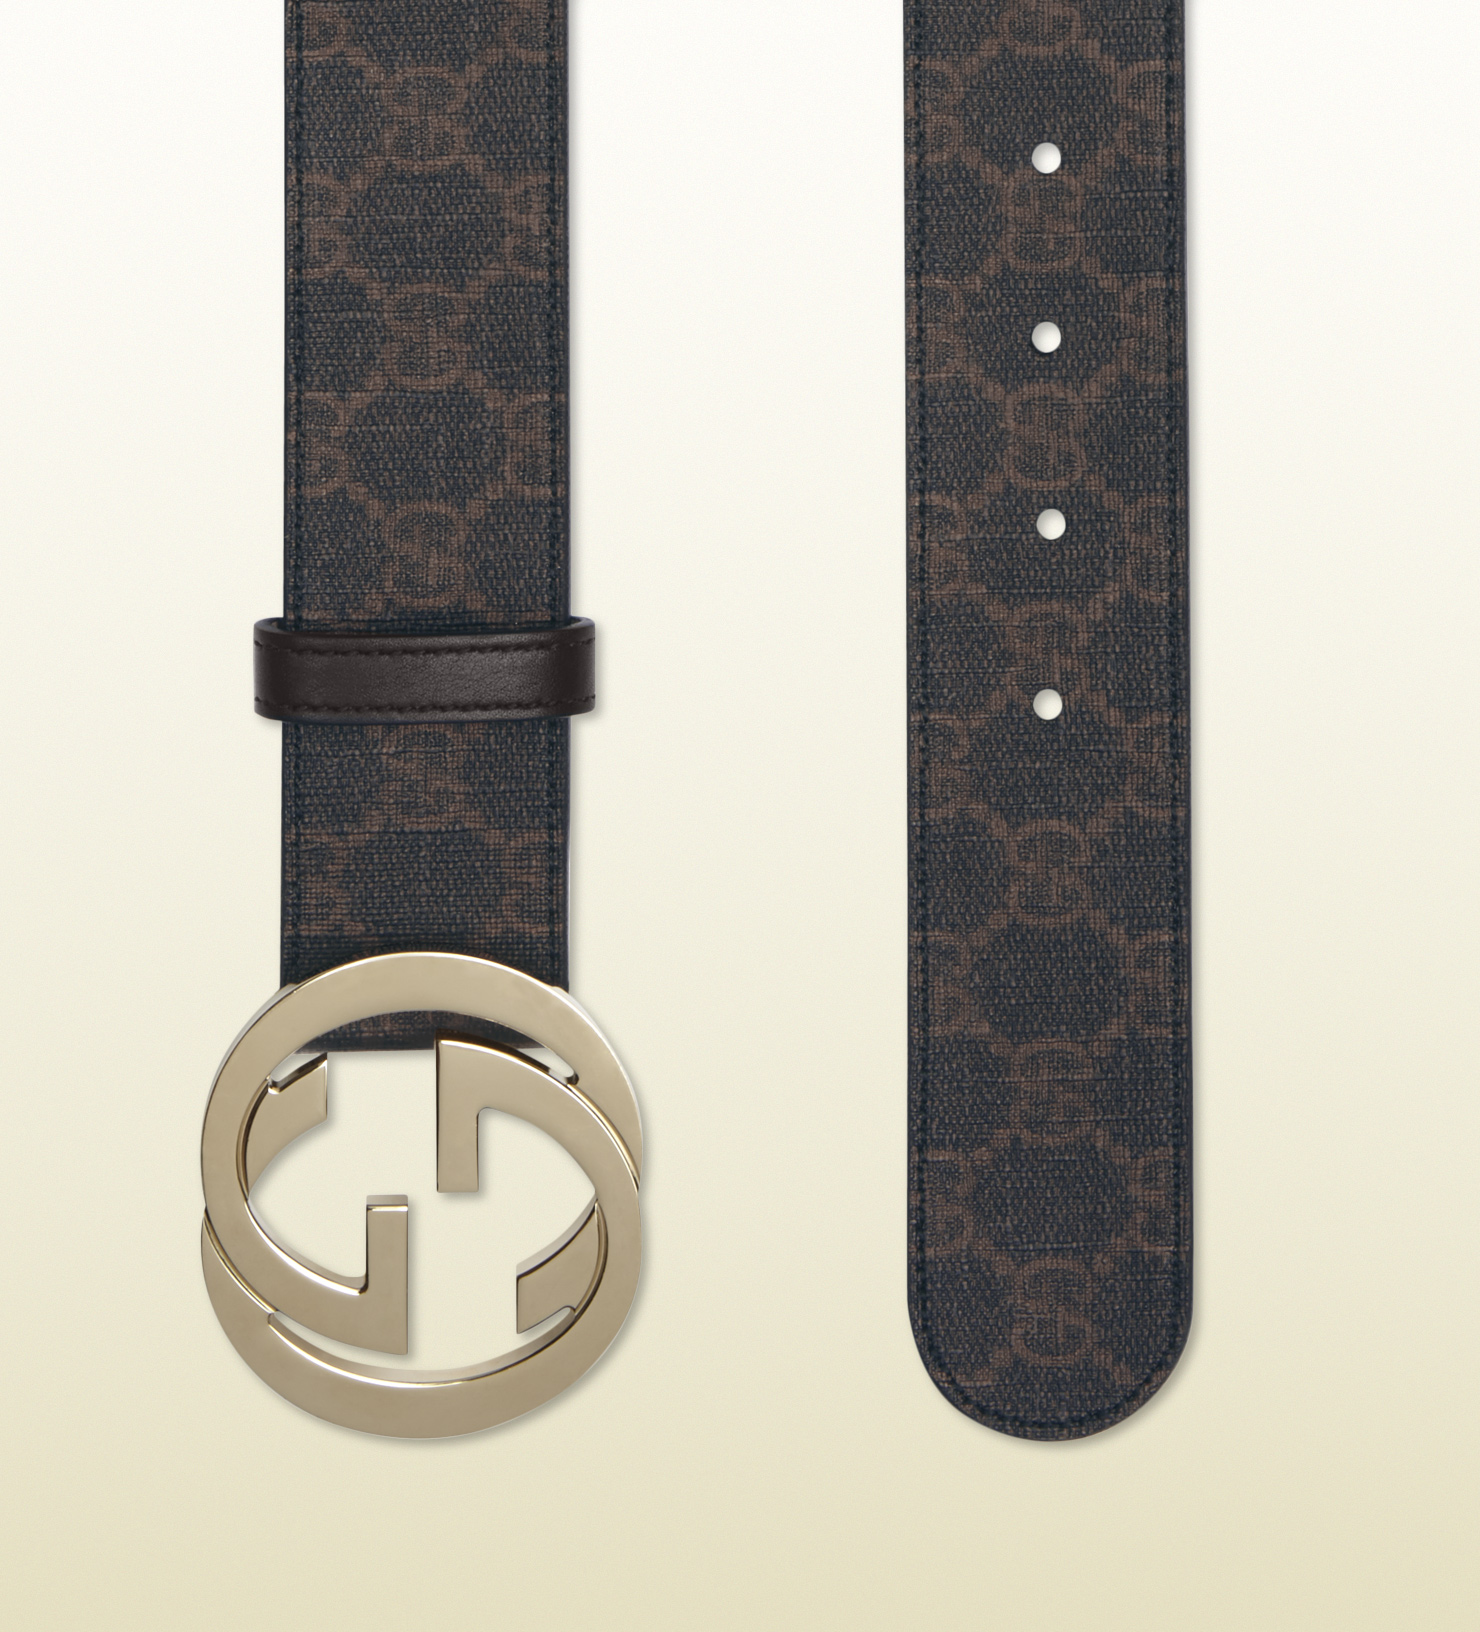 Gucci Gg Supreme Canvas Belt with Interlocking G Buckle in Black for Men - Lyst